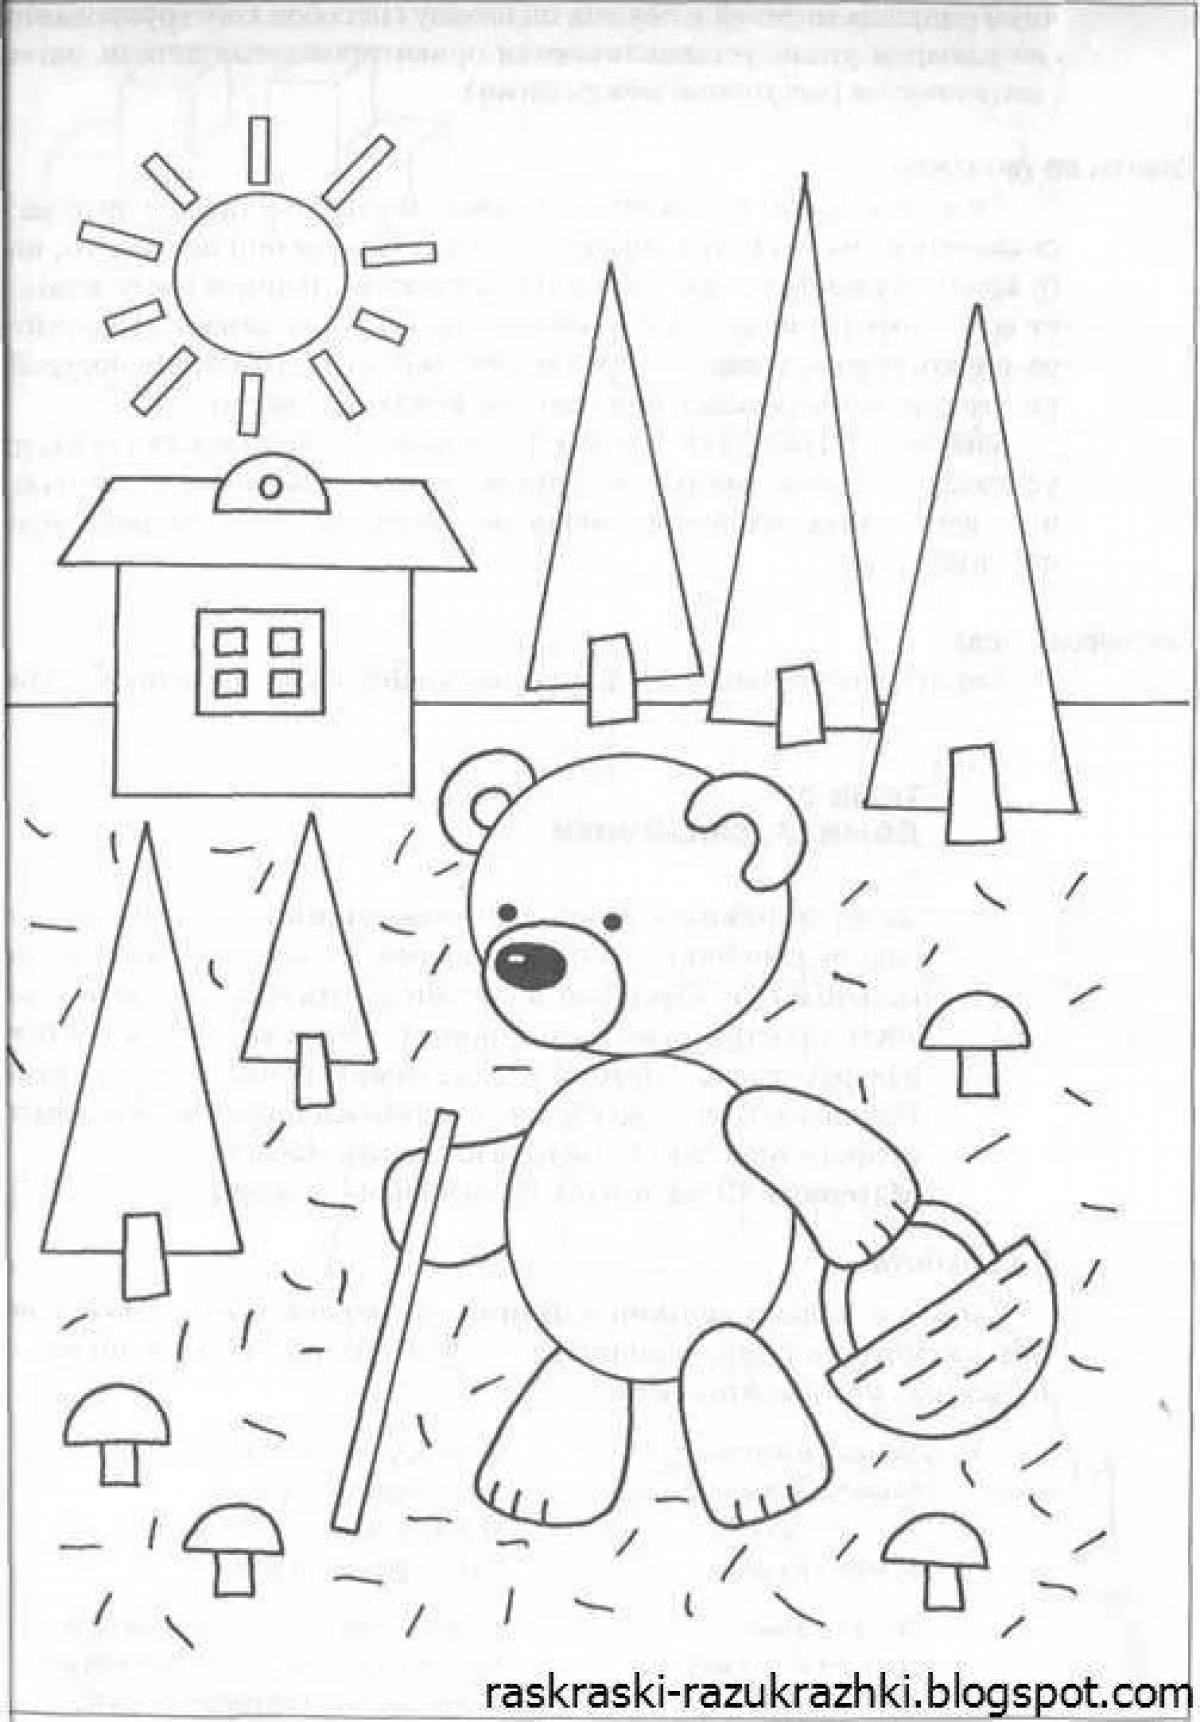 Coloring book for preschoolers